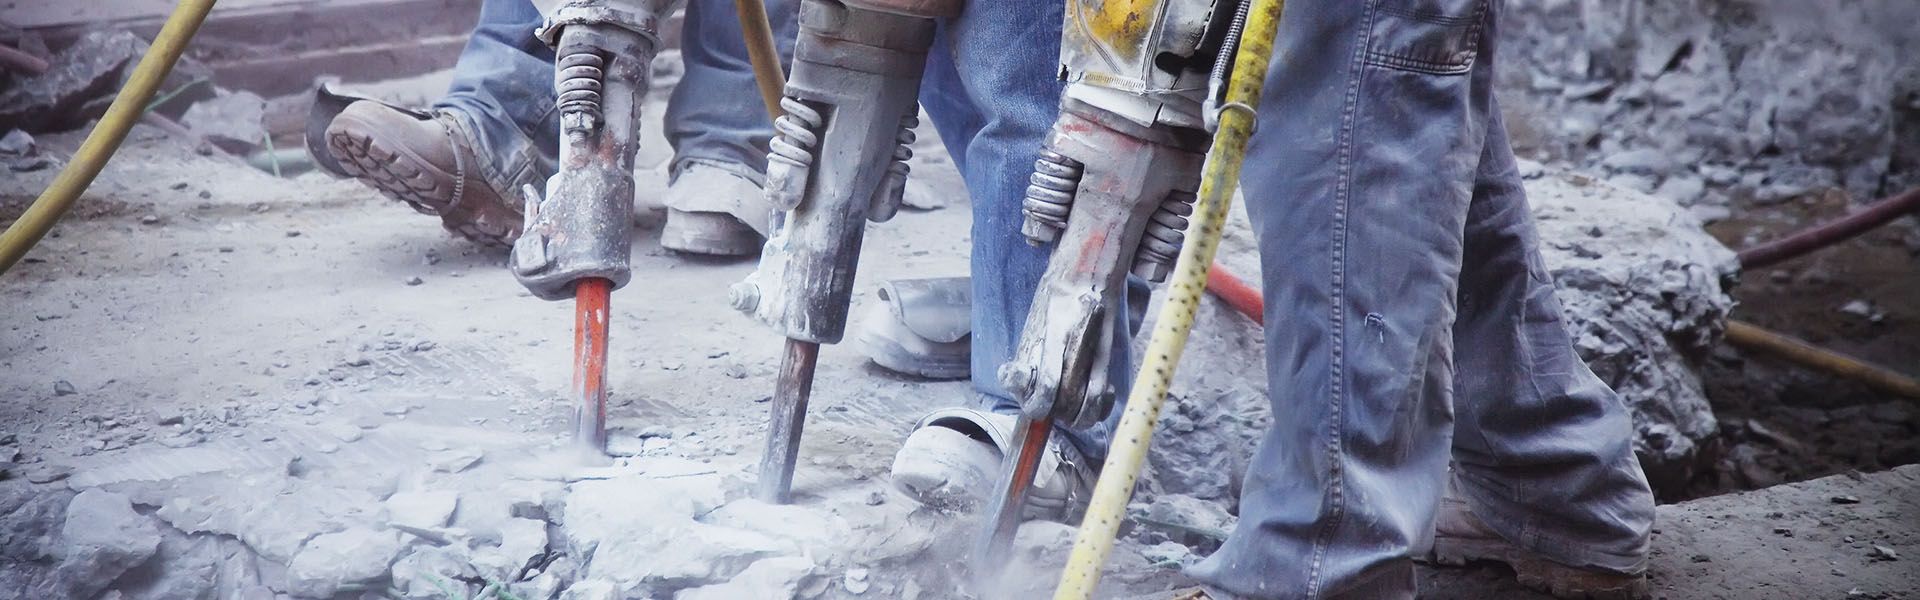 Construction jobs to bid on in georgia